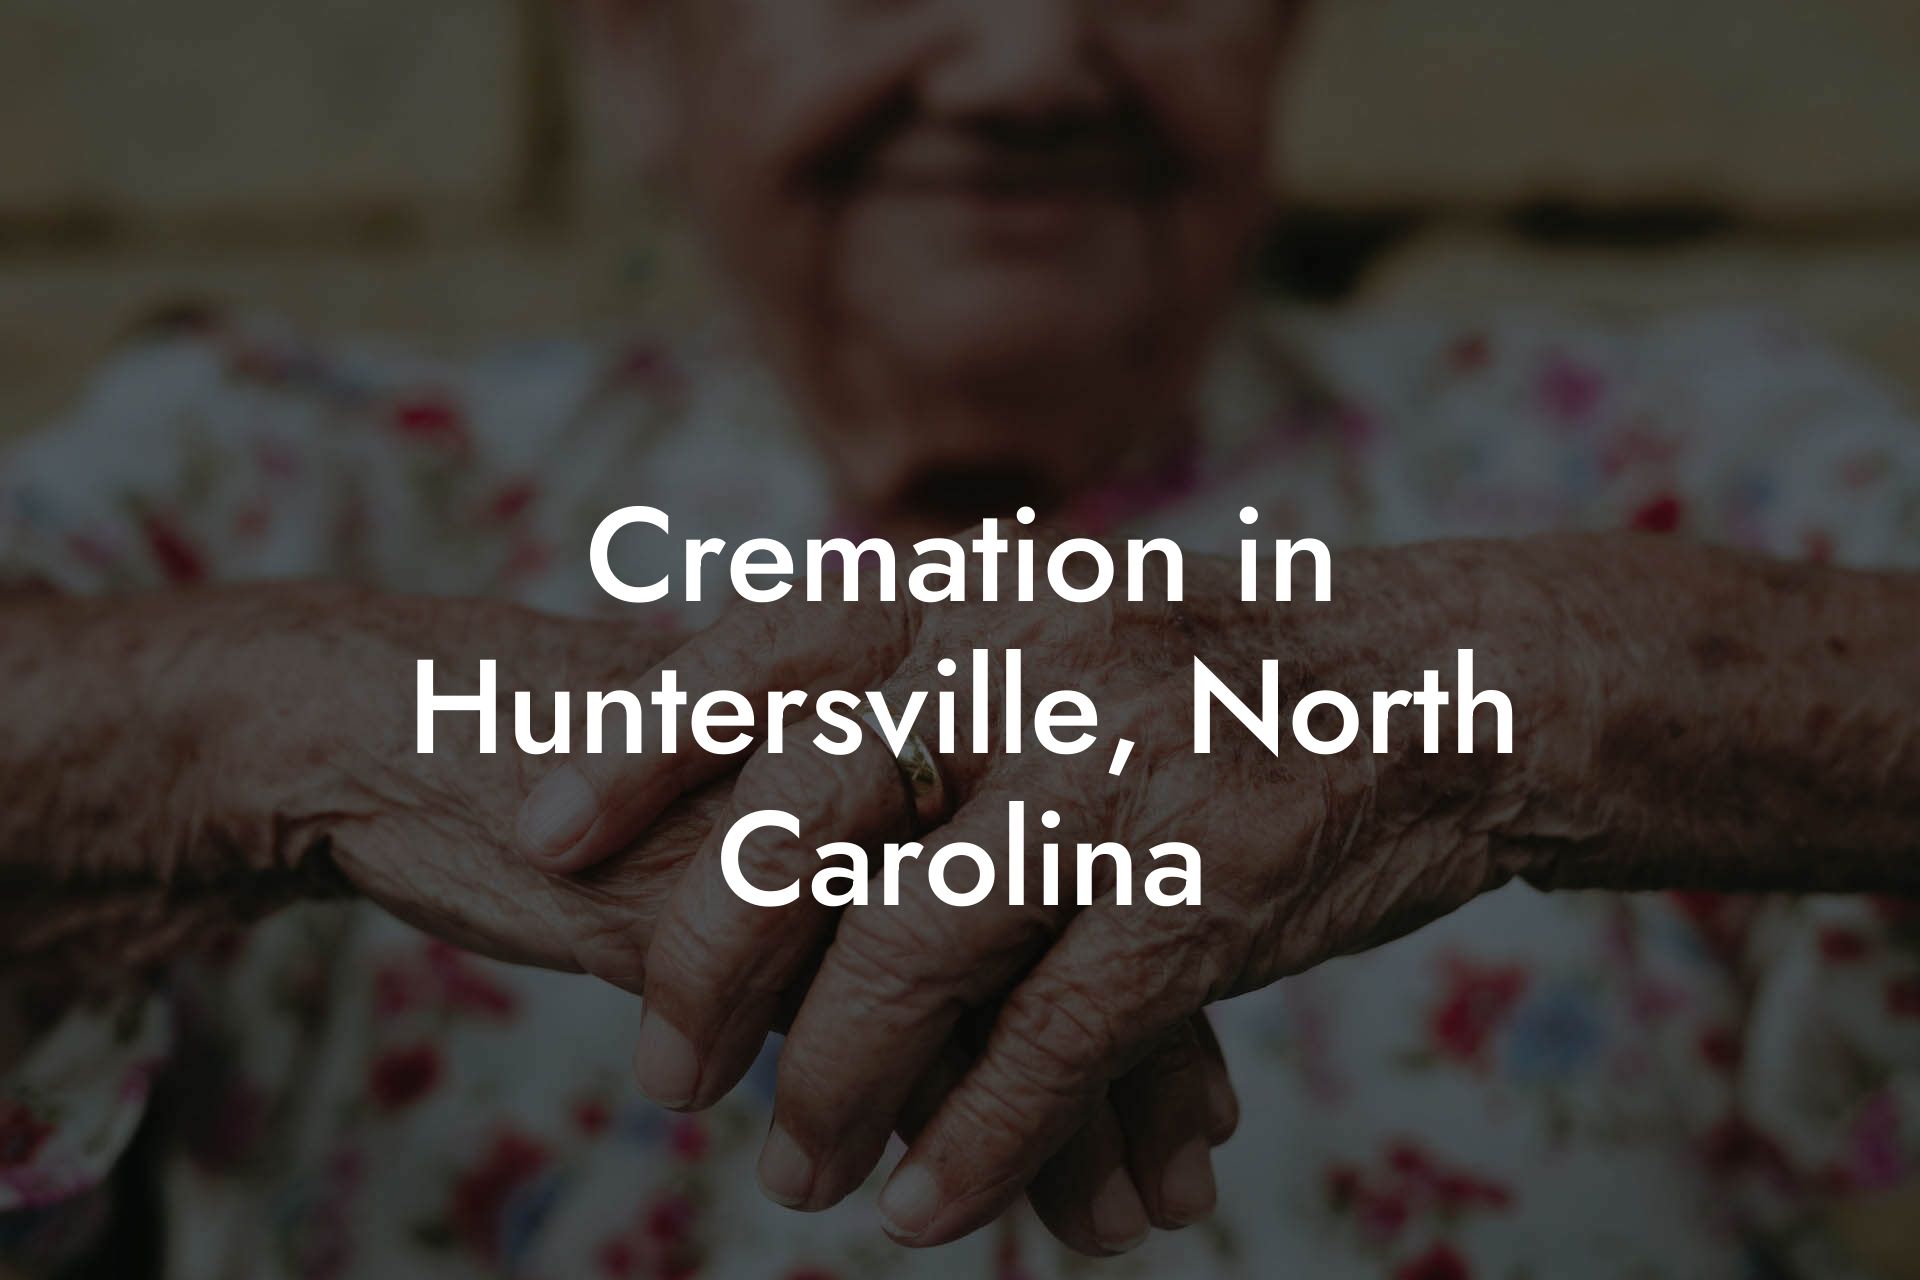 Cremation in Huntersville, North Carolina